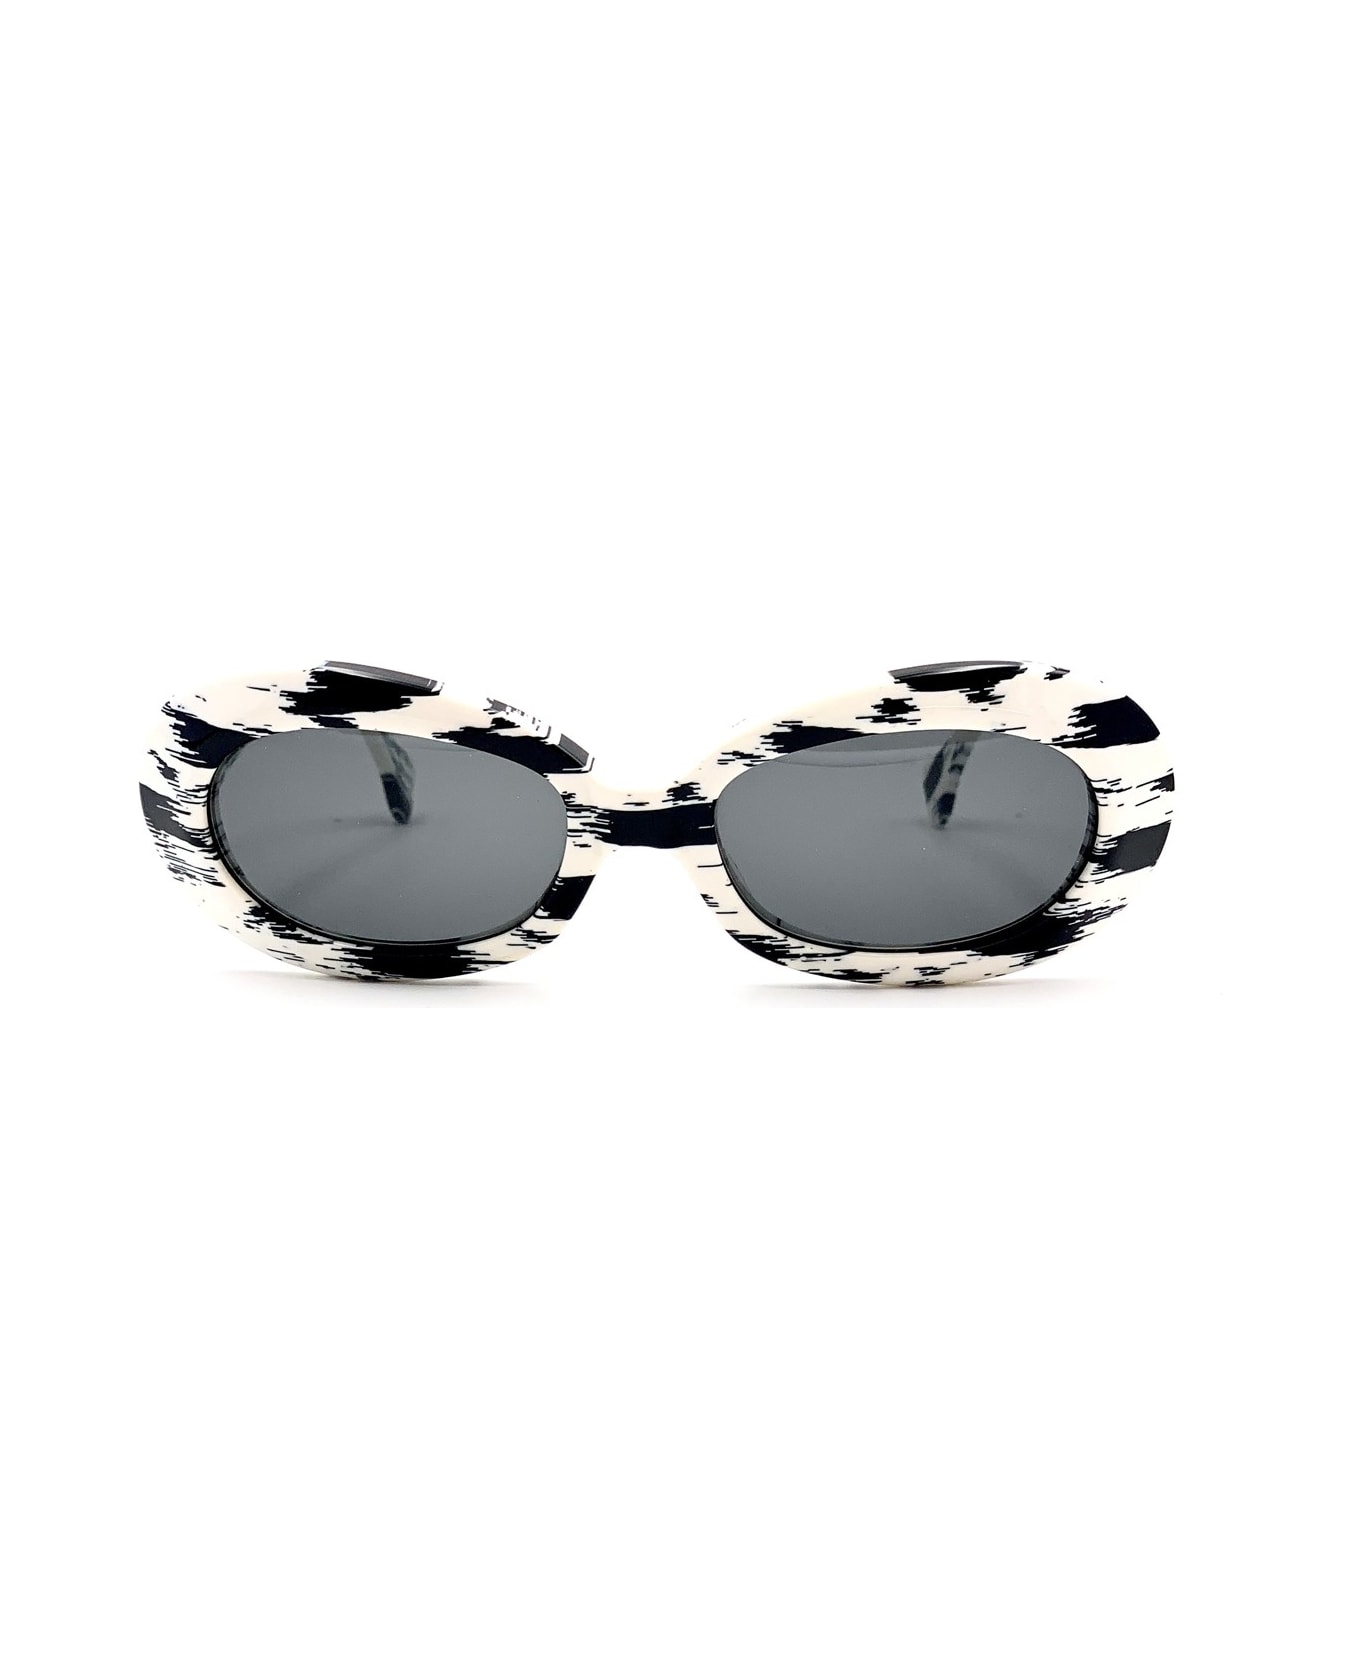 Alain Mikli D305 Edizione Speciale Dalmatians Sunglasses - Bianco